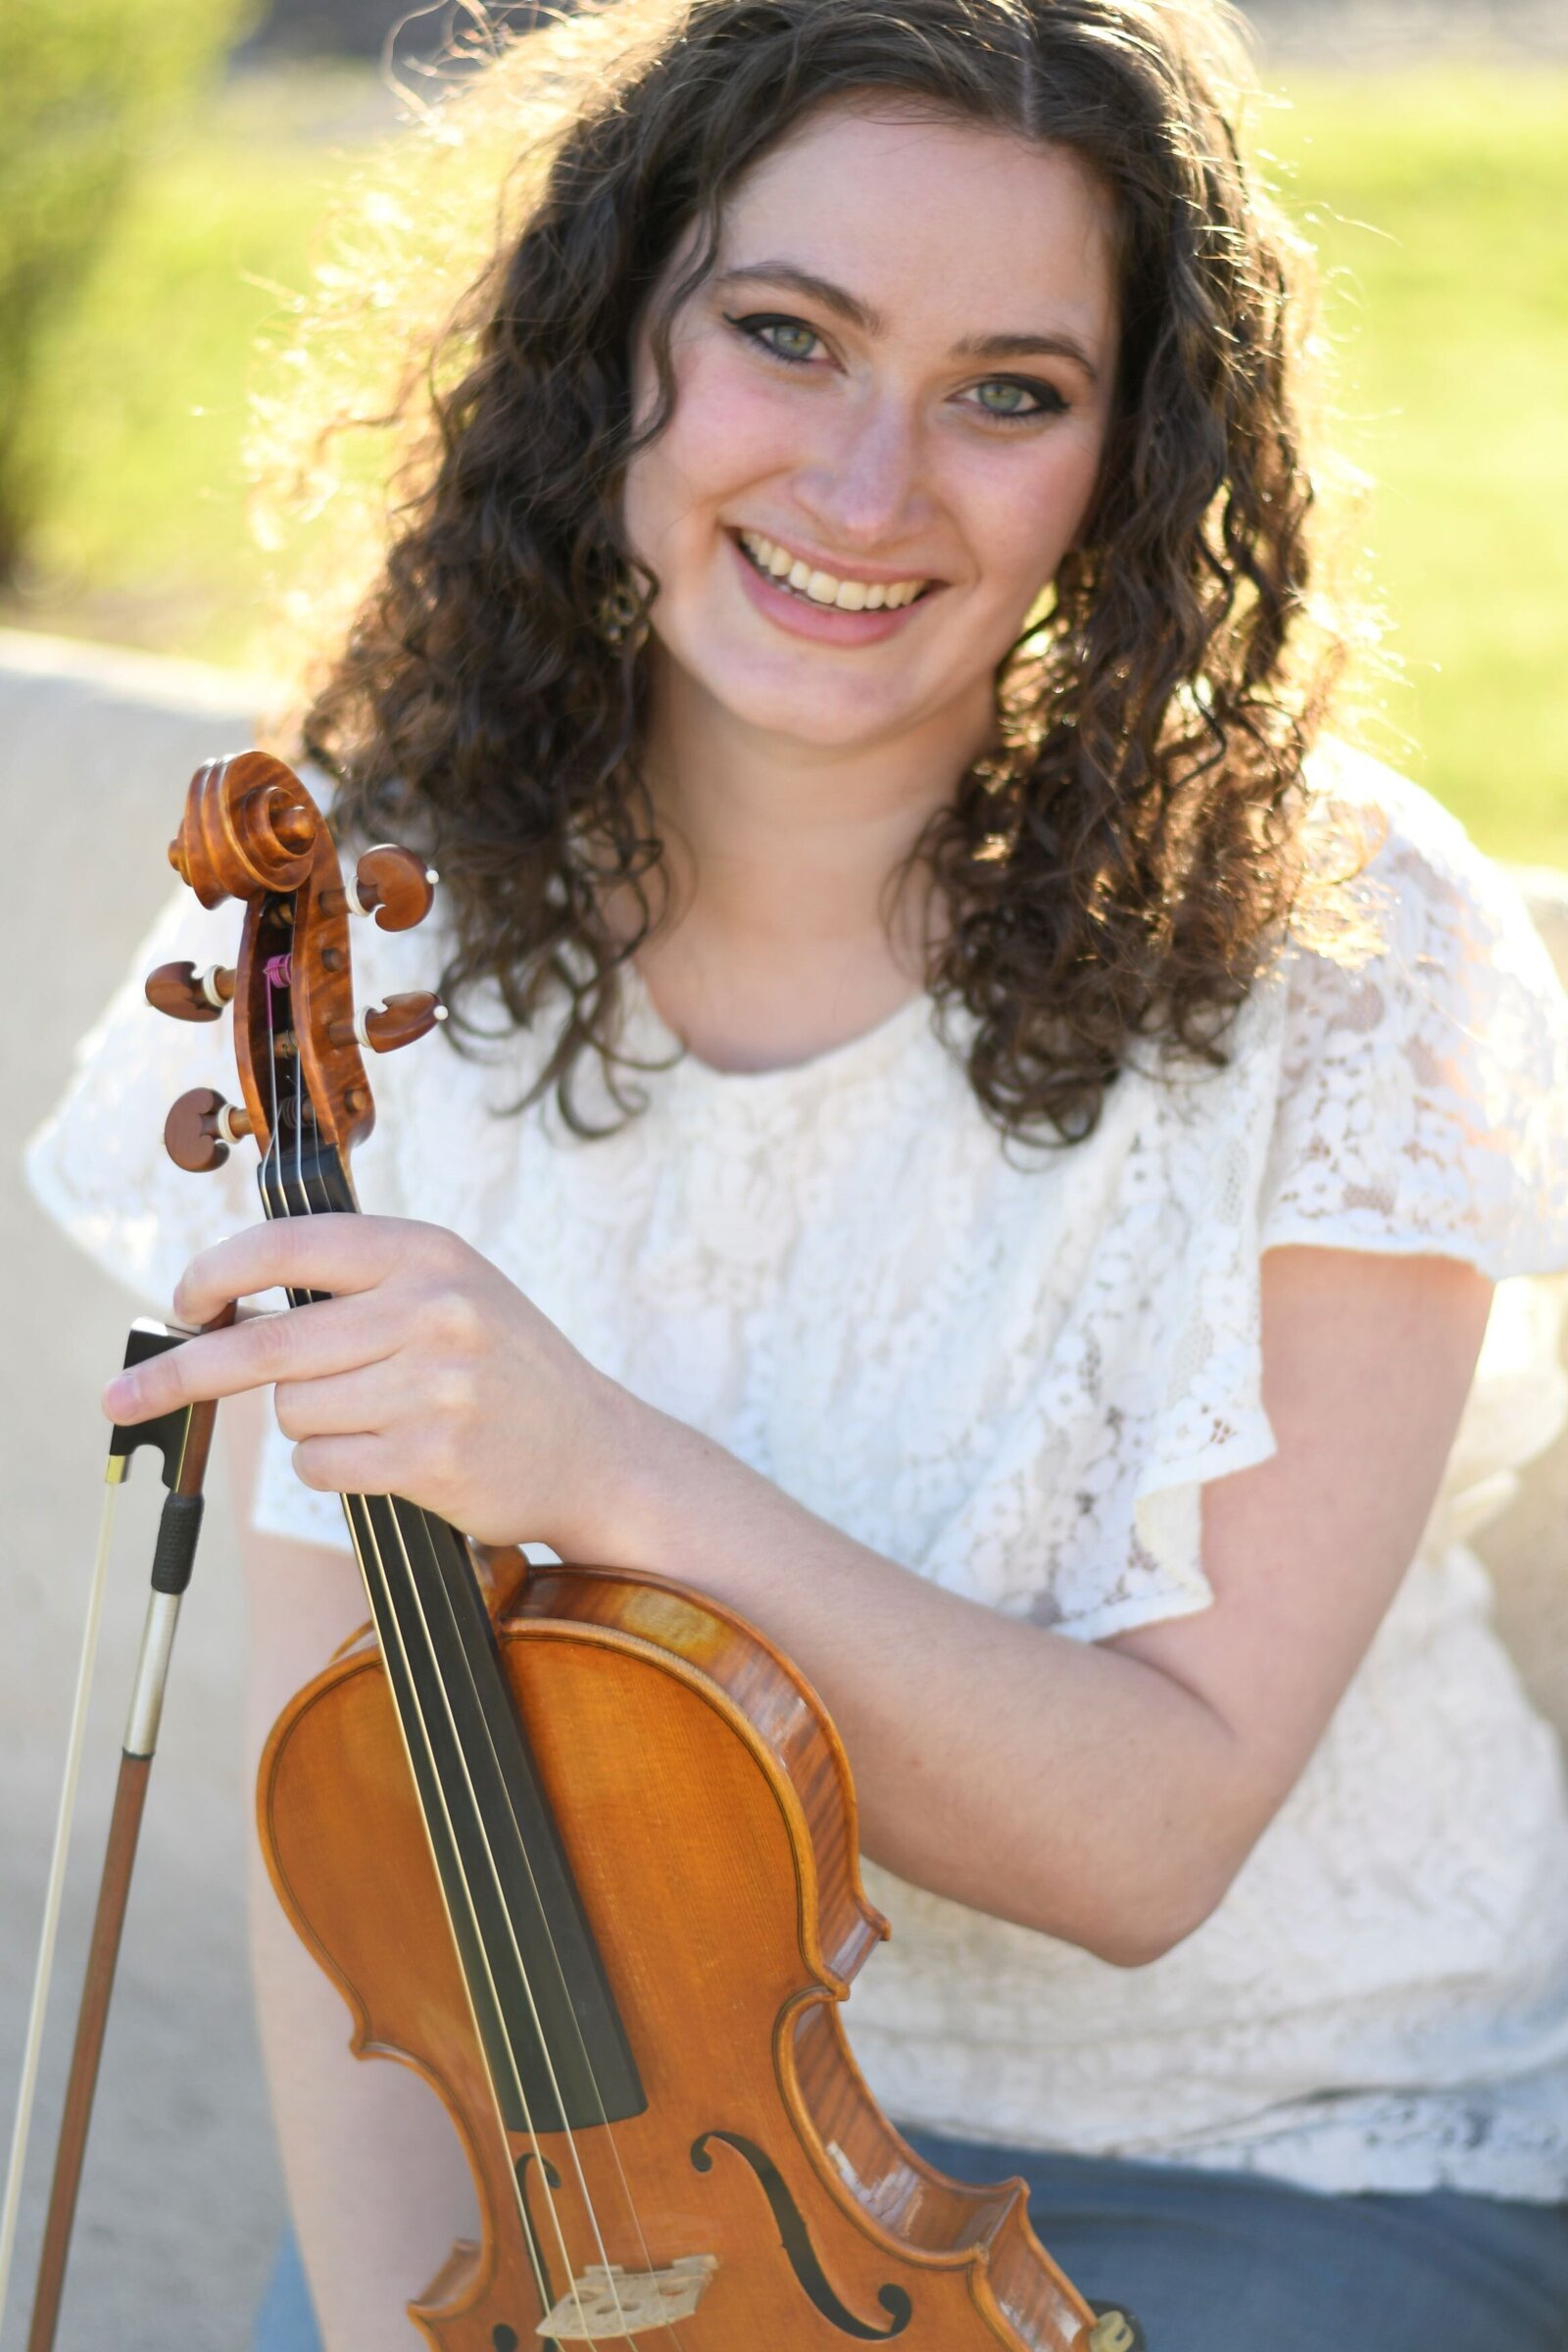 Franklin Method Educator and violinist Erika Burns smiling with her violin.